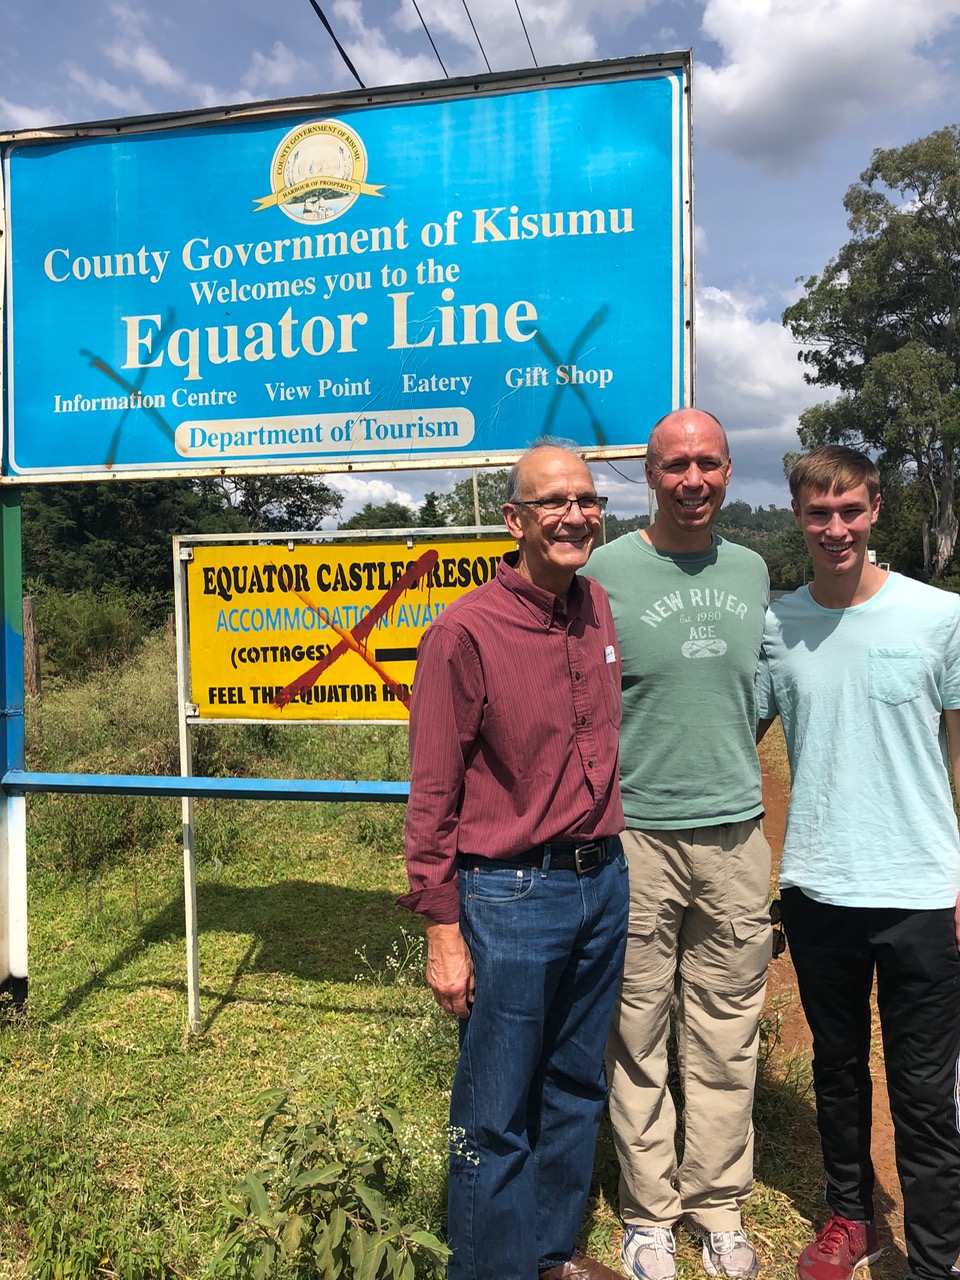 Rich, Ken and Caleb at Equator Line